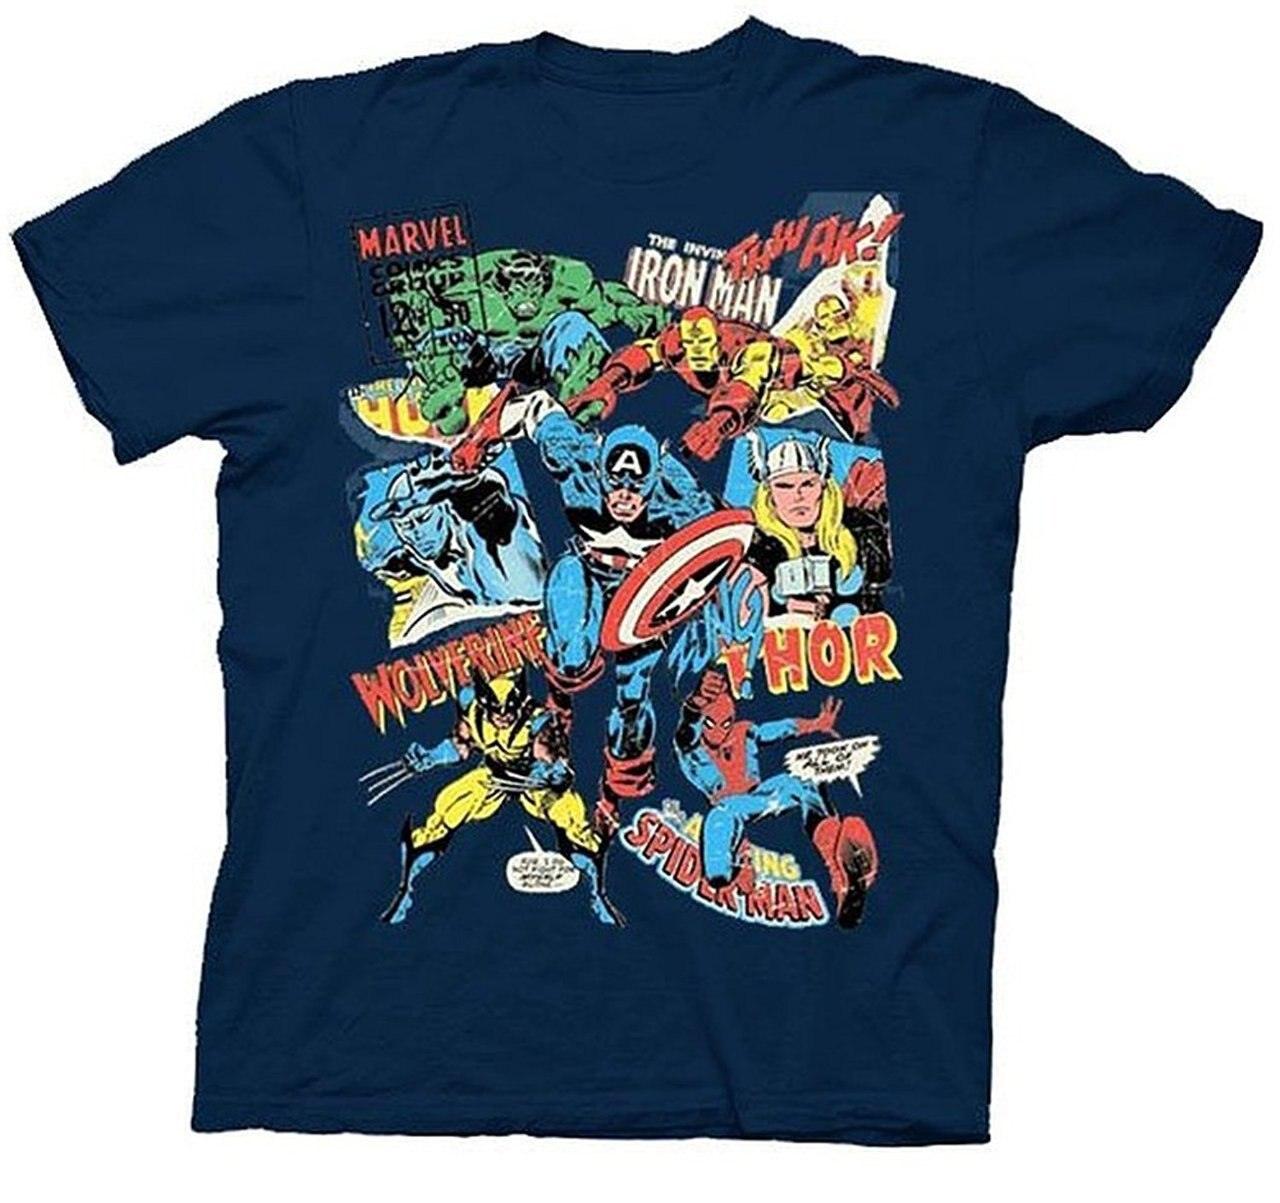 80s Spider Man Marvel Comics Superhero Underoos T-shirt Youth Small -   Canada